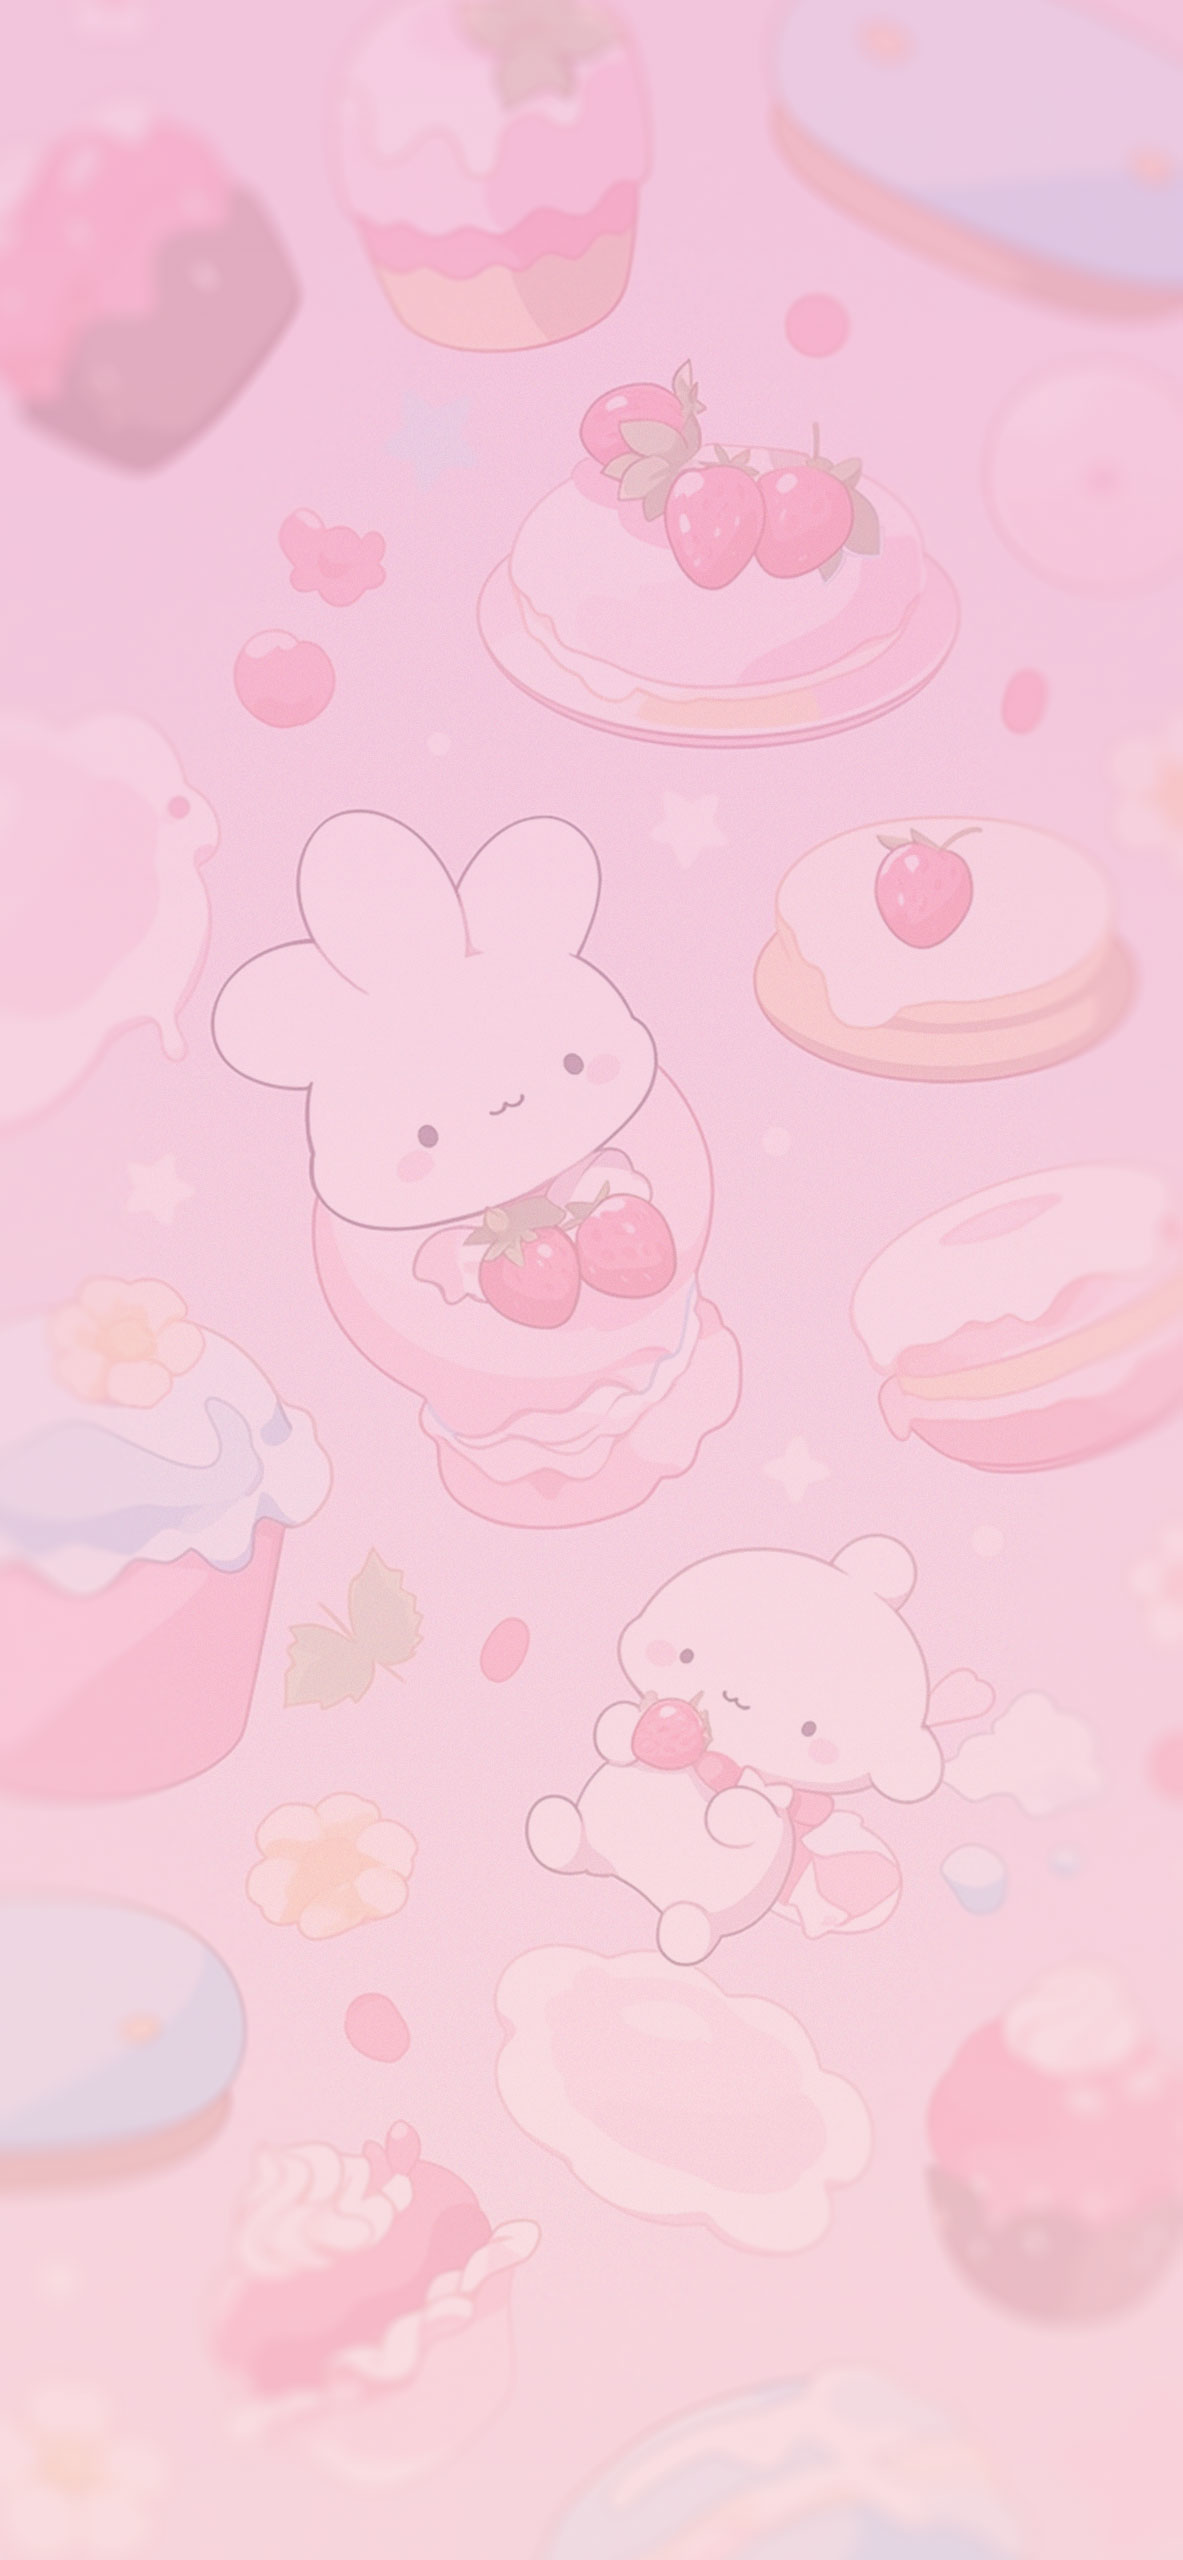 Sanrio cupcakes aesthetic wallpaper Sweet treats pink wallpape